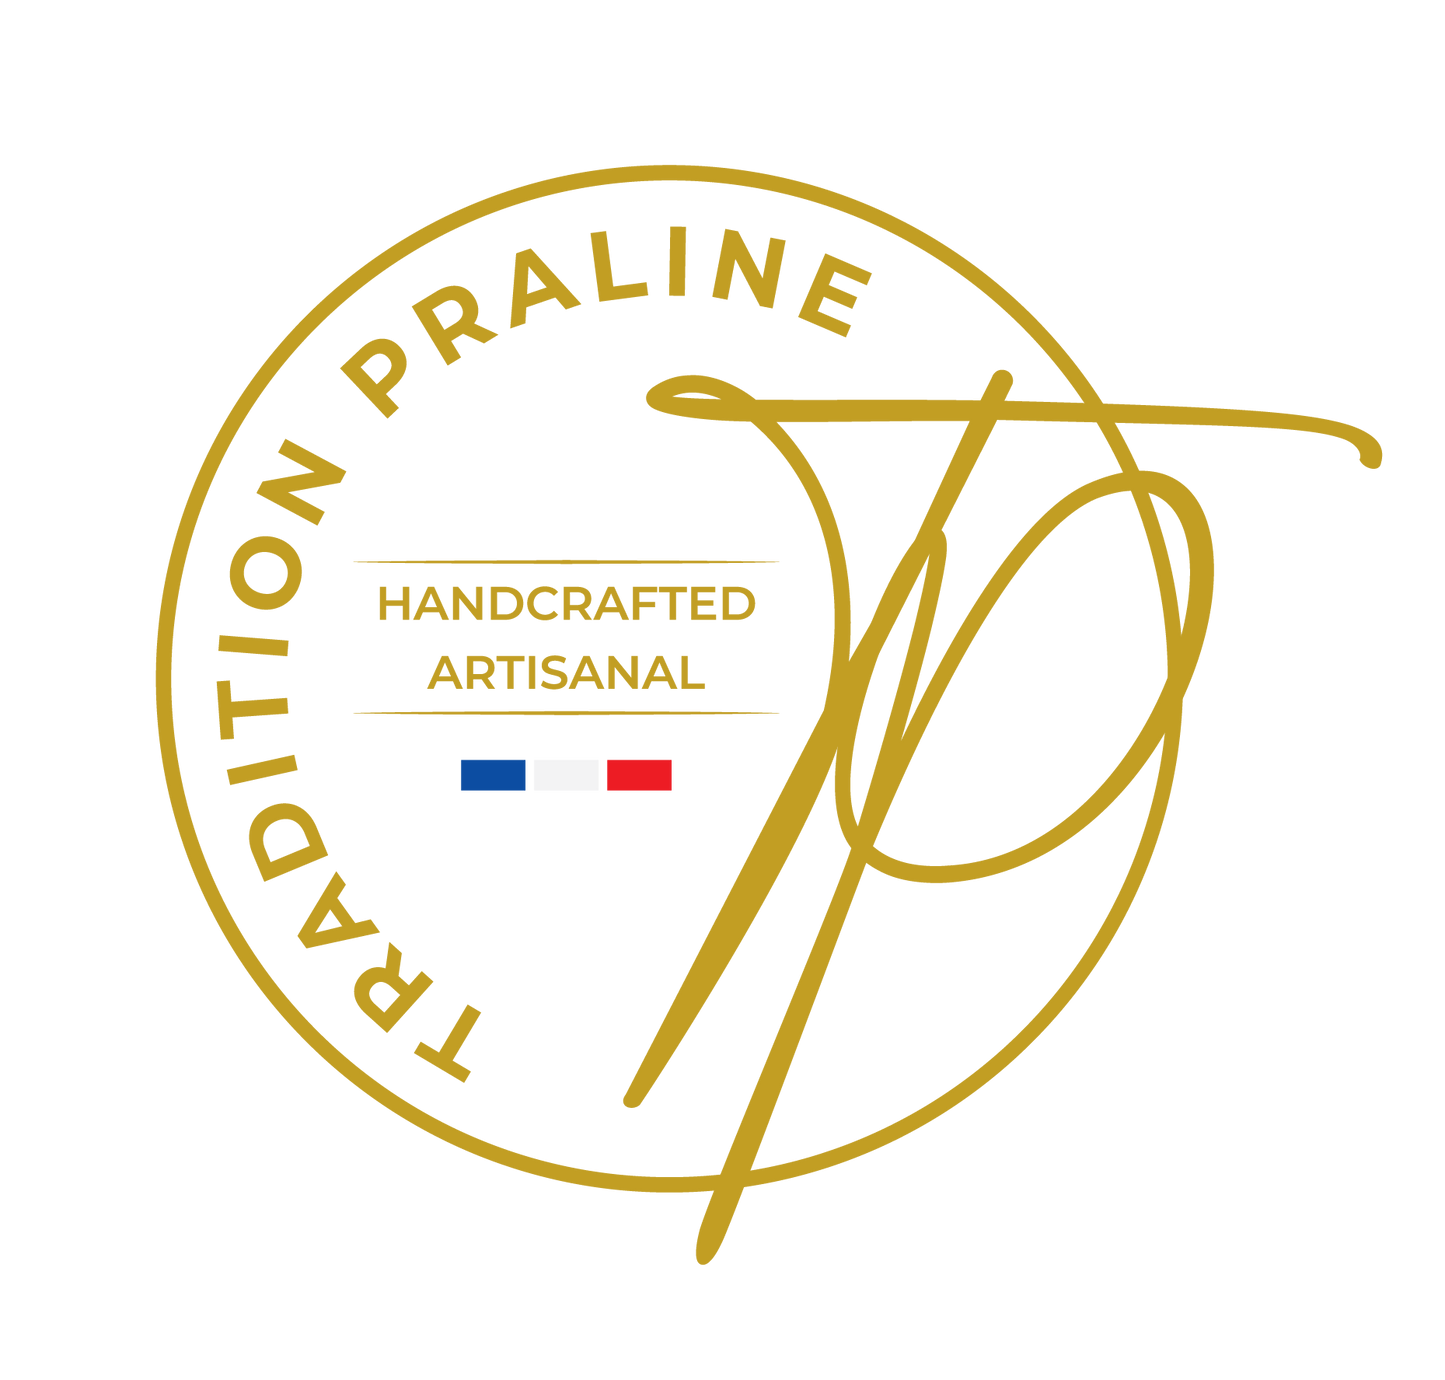 gold tradition praline logo